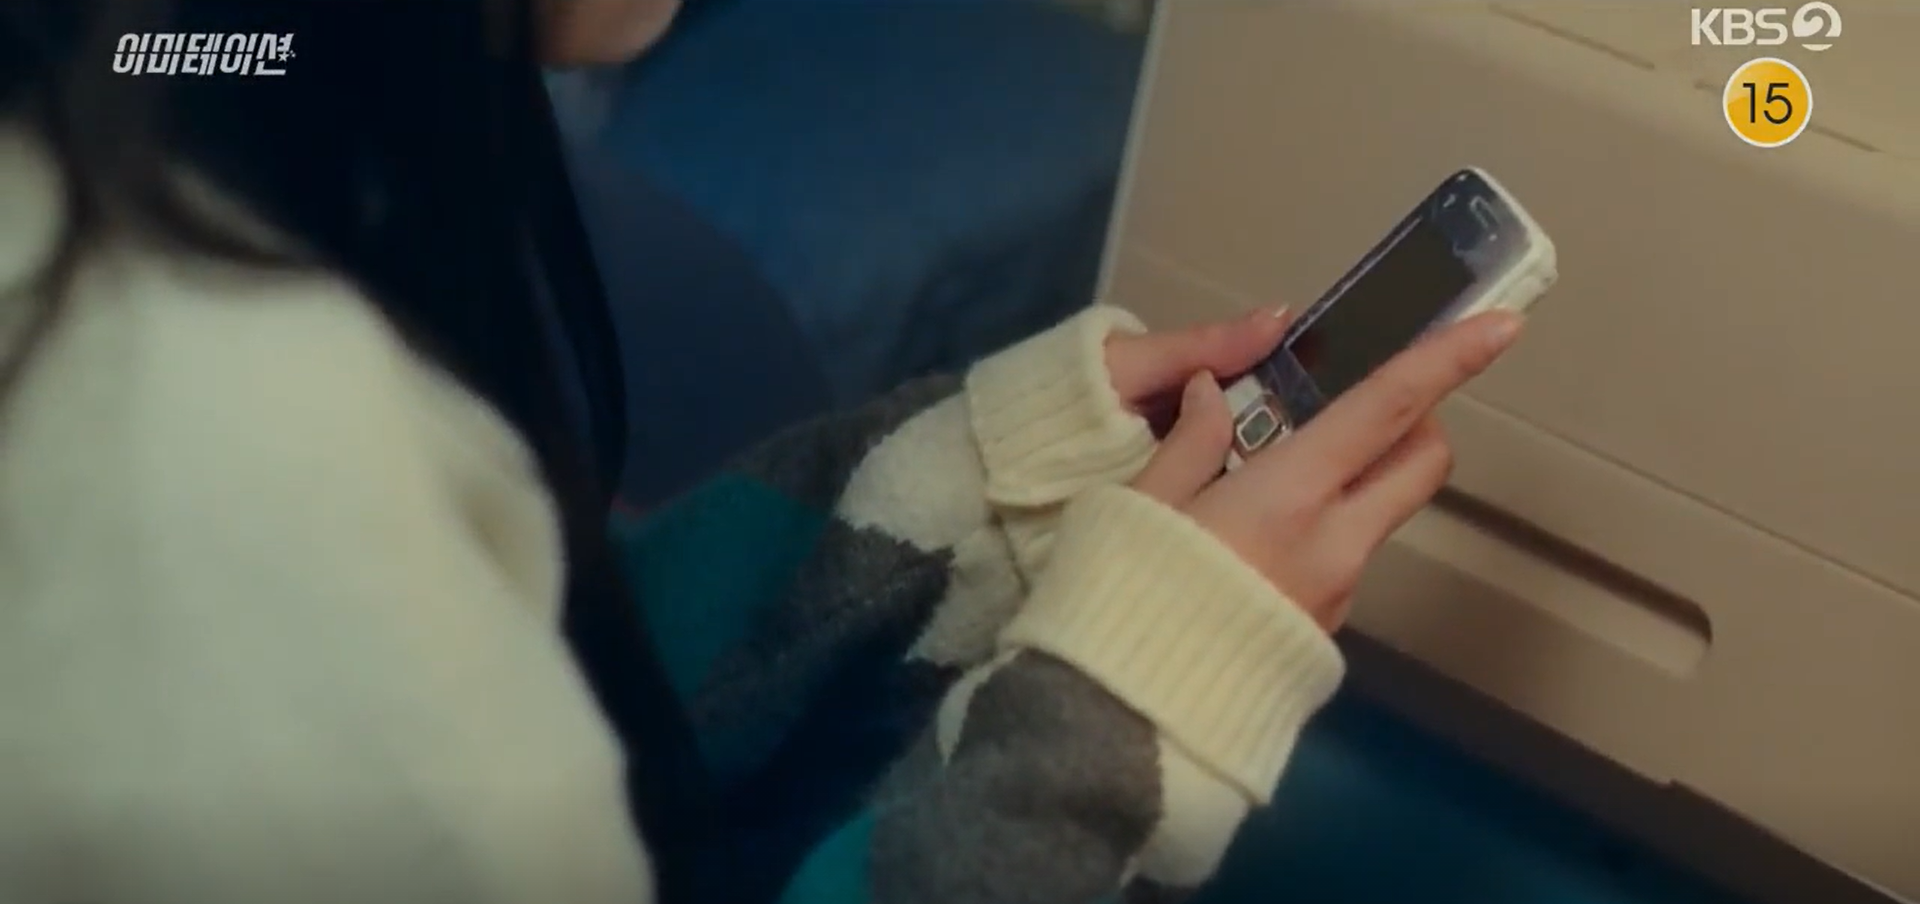 korean drama imitation - mysterious phone